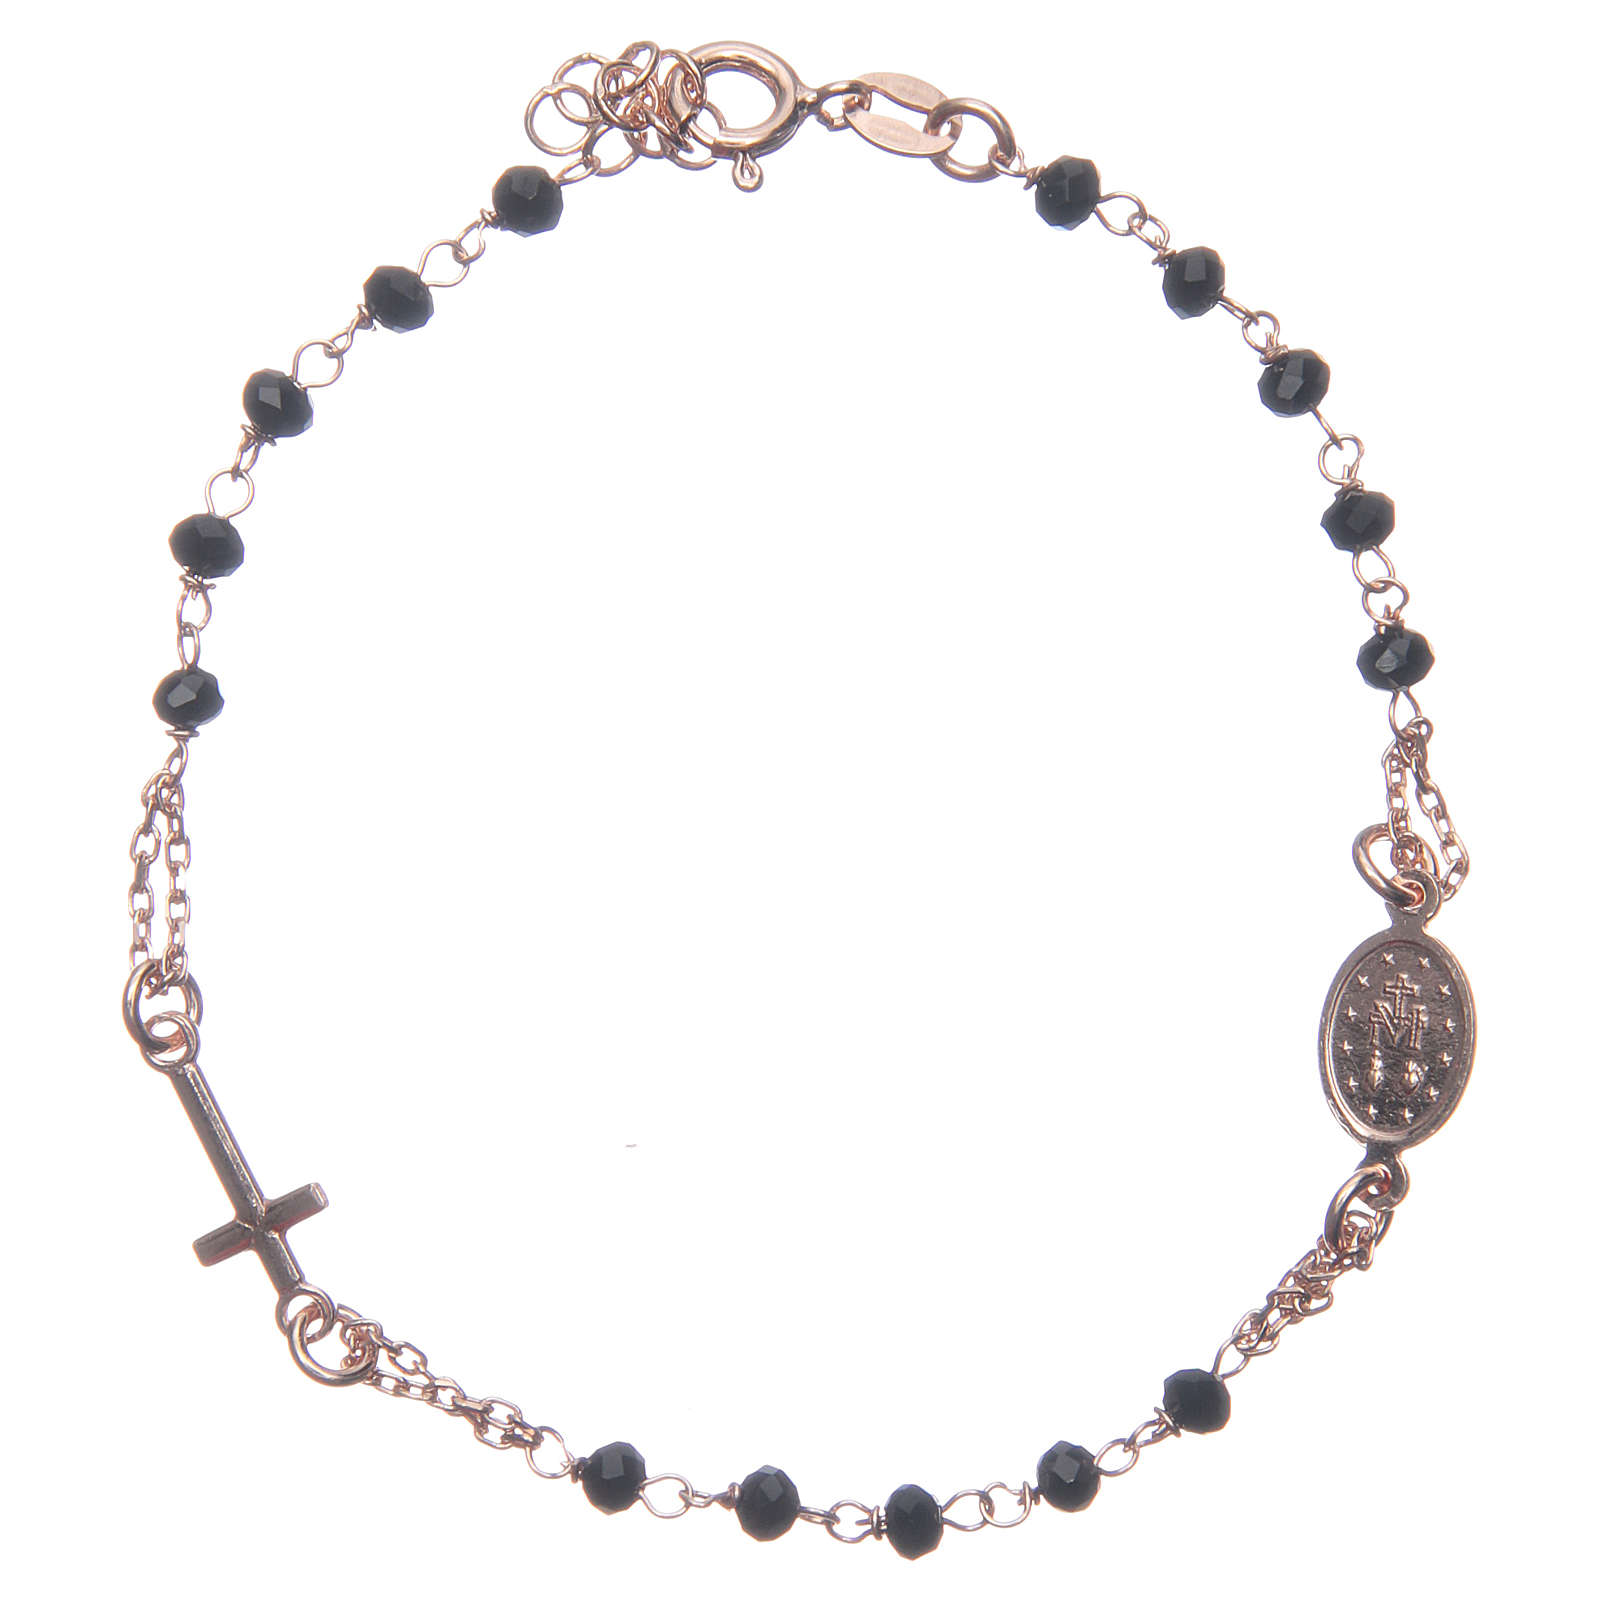 Rosary bracelet rosè and black 925 sterling silver | online sales on ...